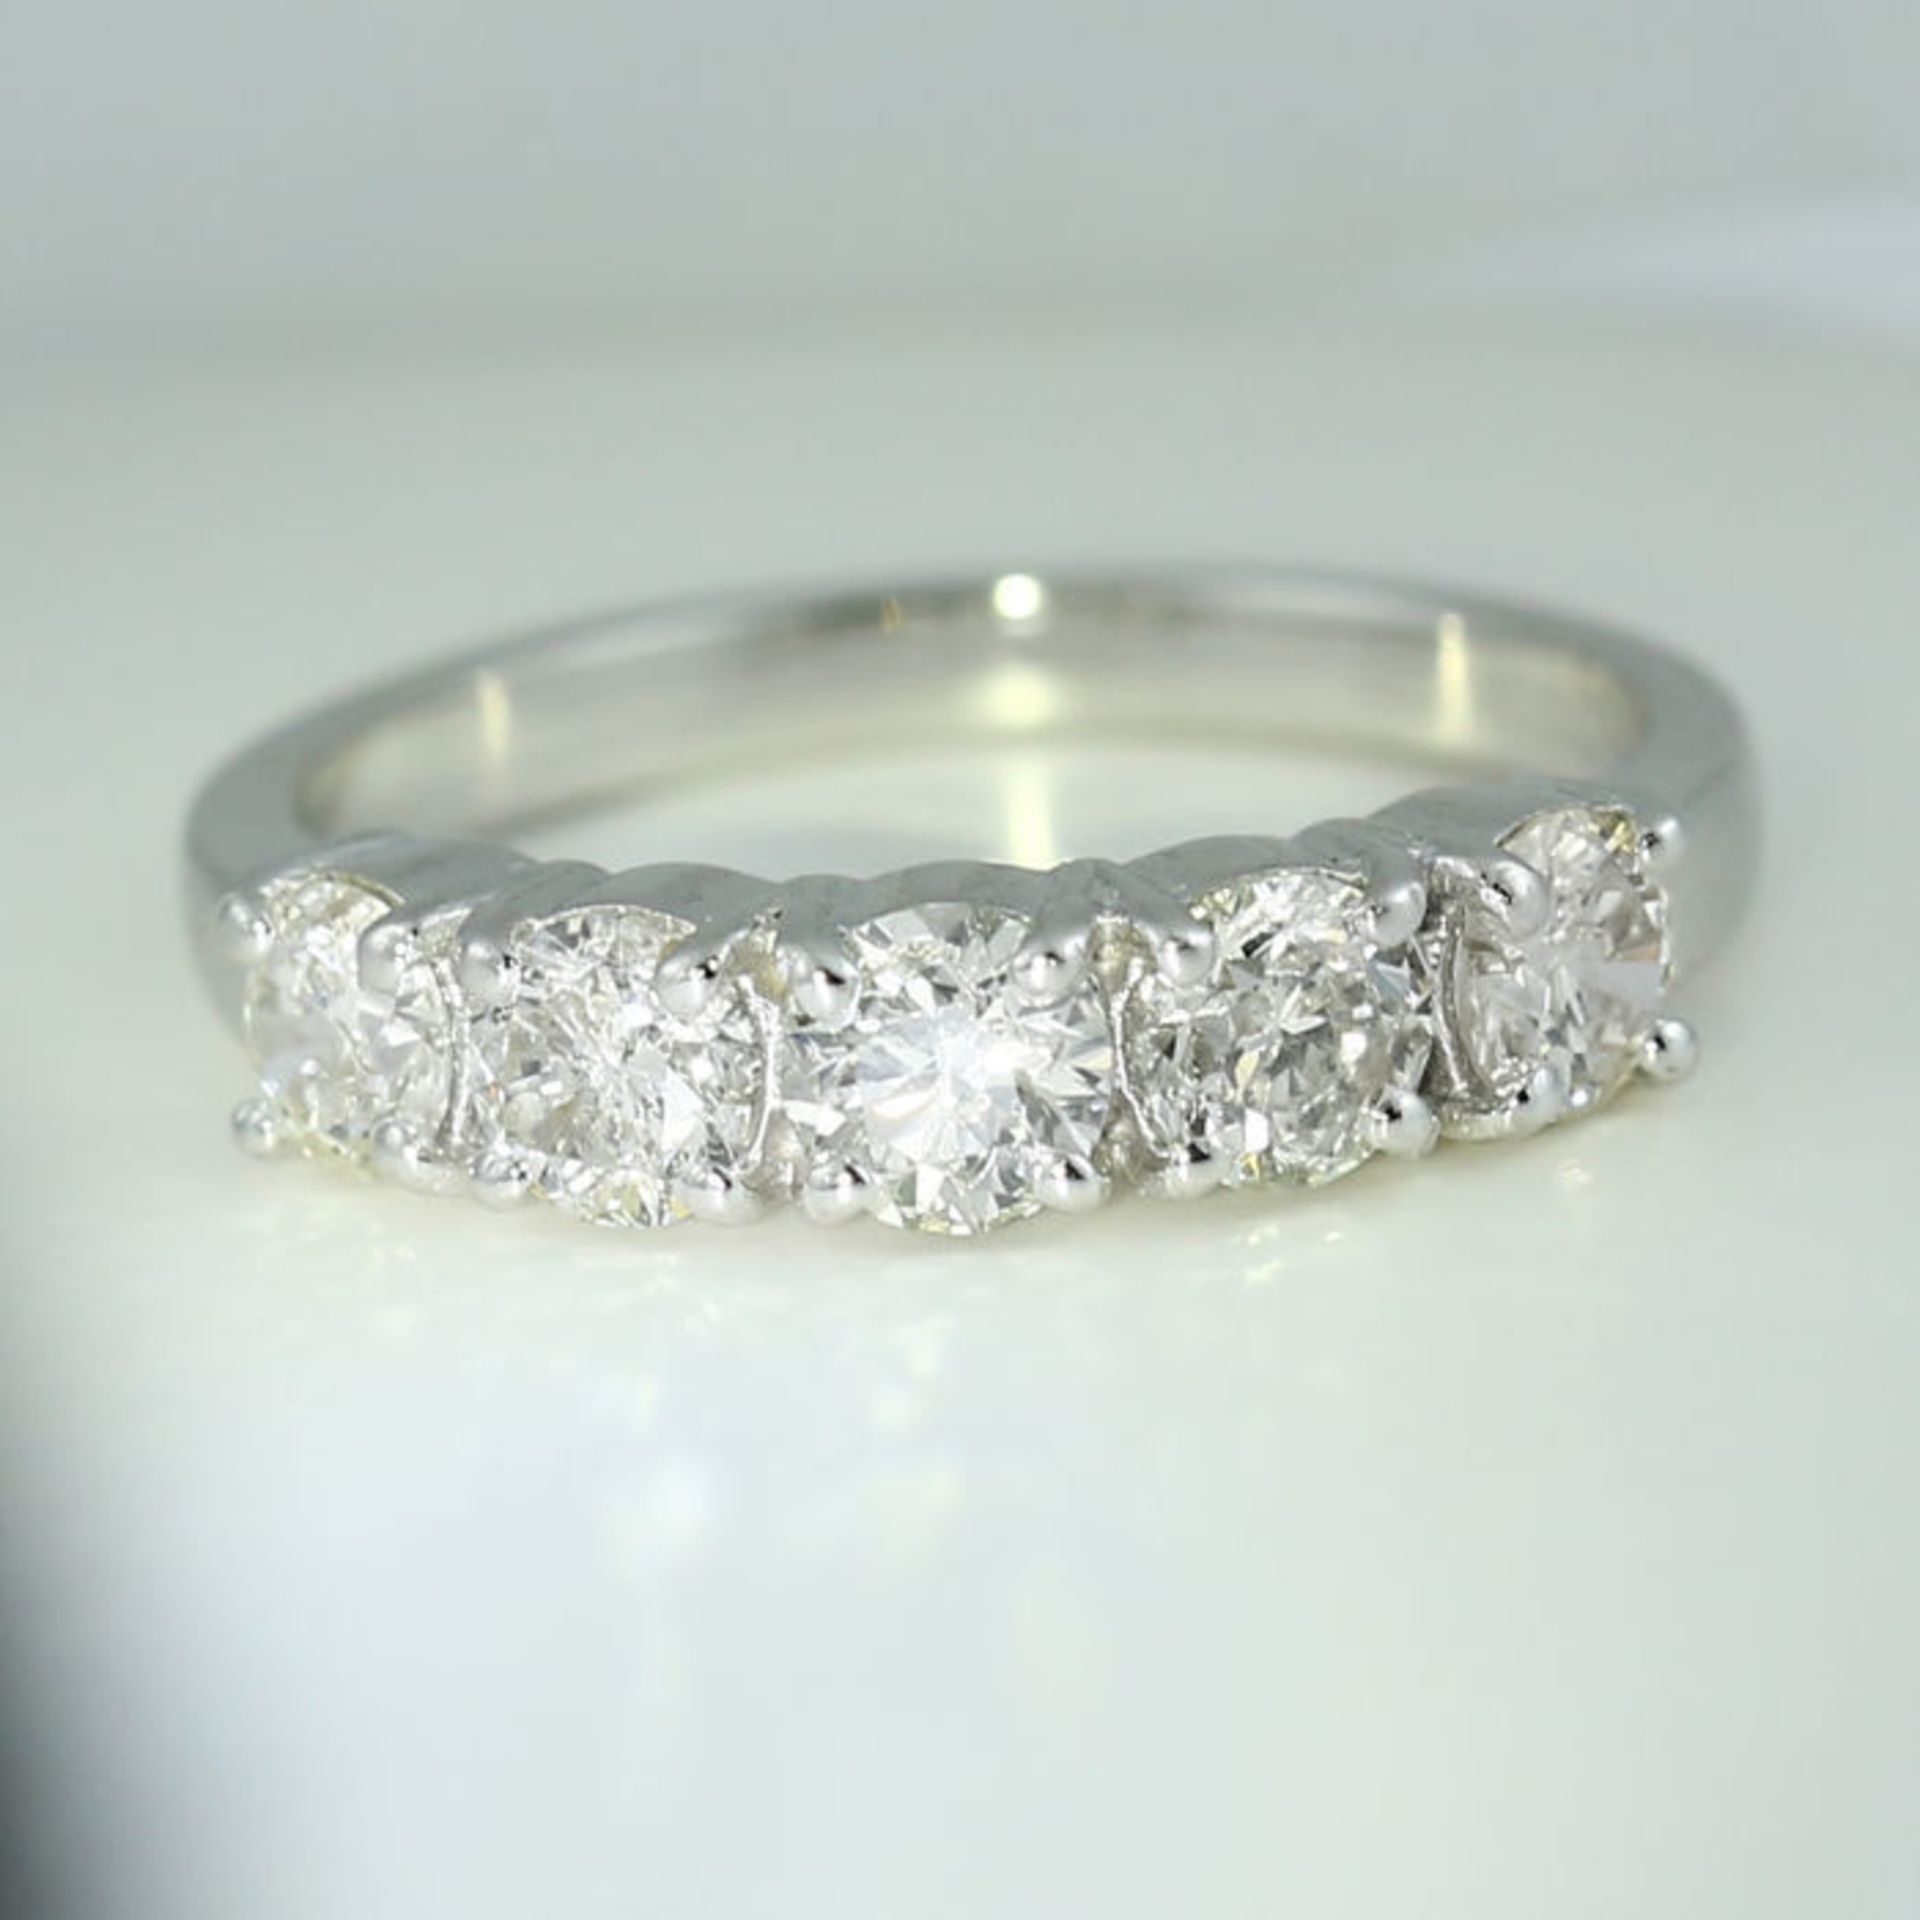 IGI Certified 14 K / 585 White Gold Solitaire Diamond Ring - Image 3 of 6